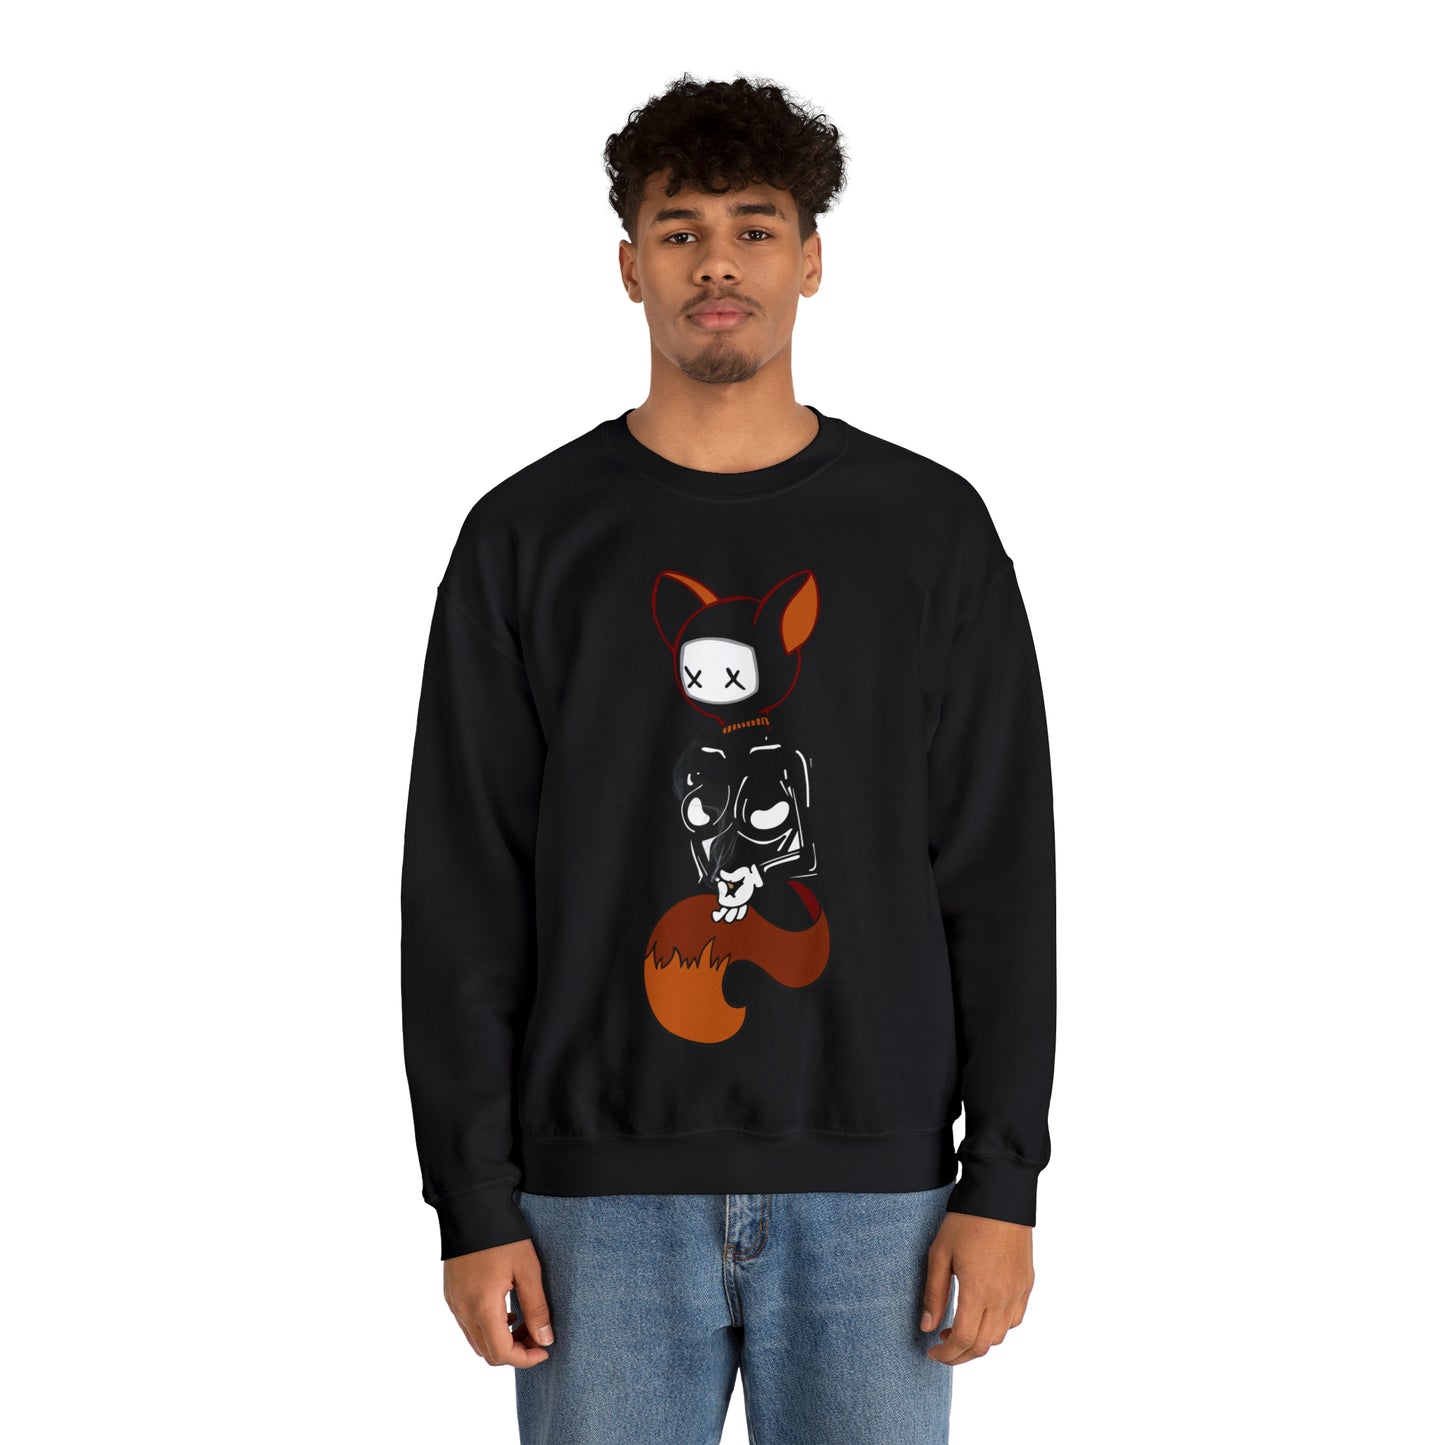 Feisty Fox Sweatshirt